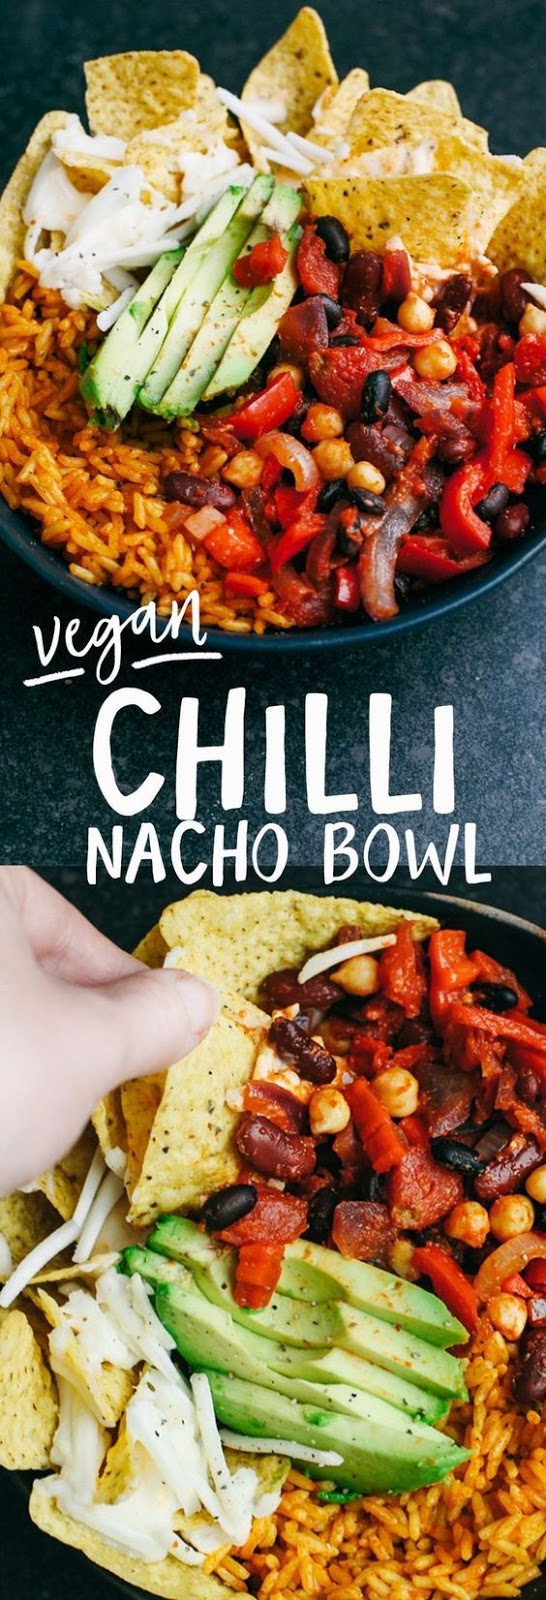 Bean chilli, rice, avocado and cheesy nachos in one delicious bowl!